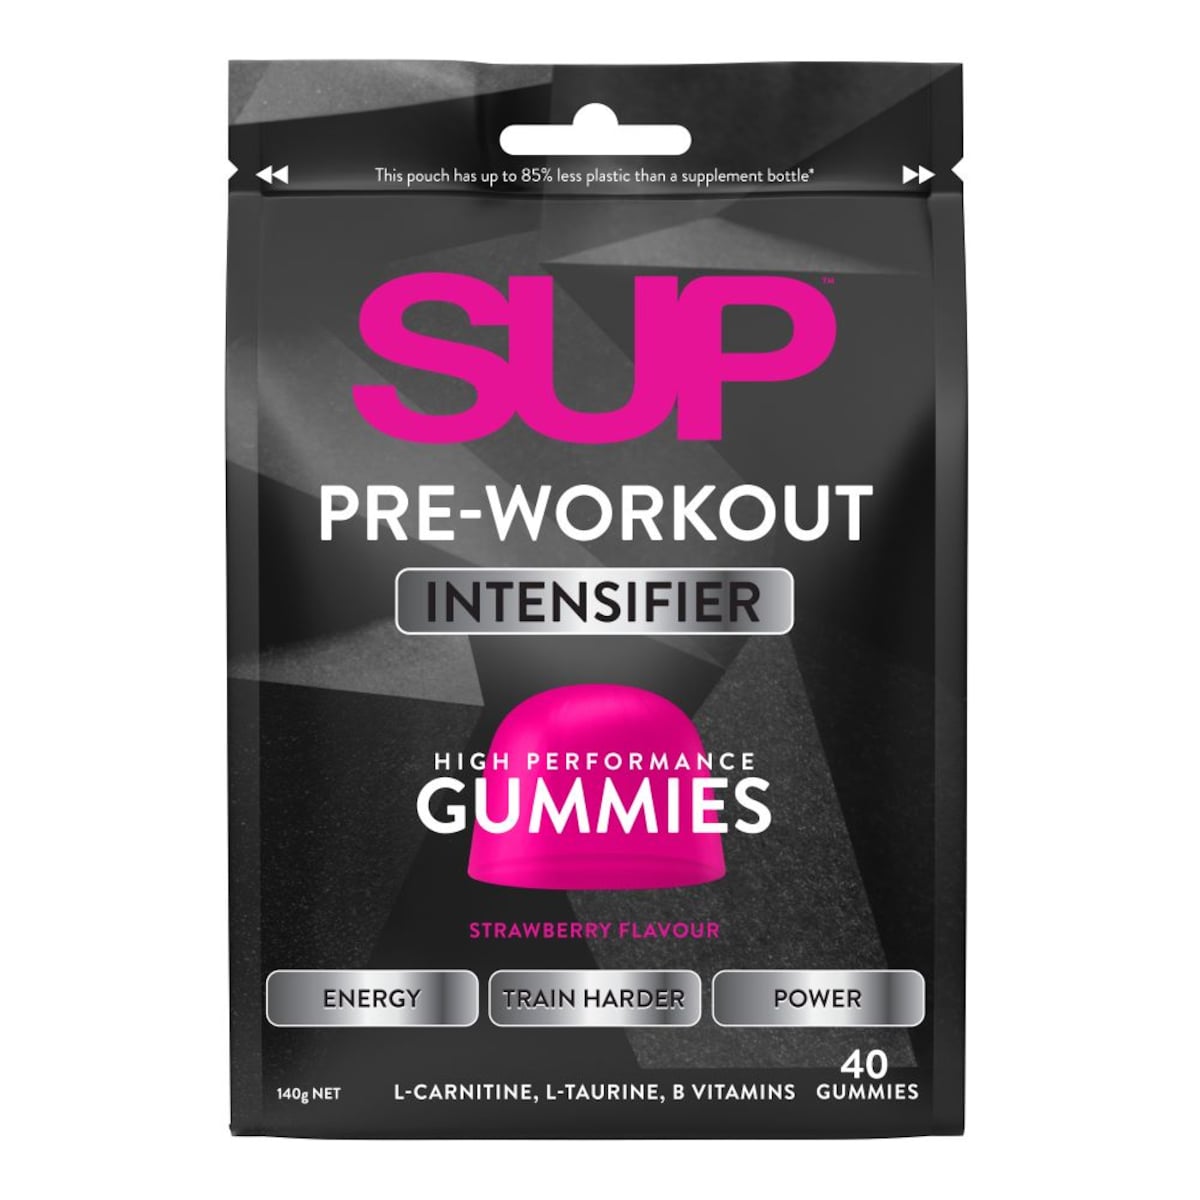 SUP Pre-workout Intensifier Gummies 40 Pack Australia